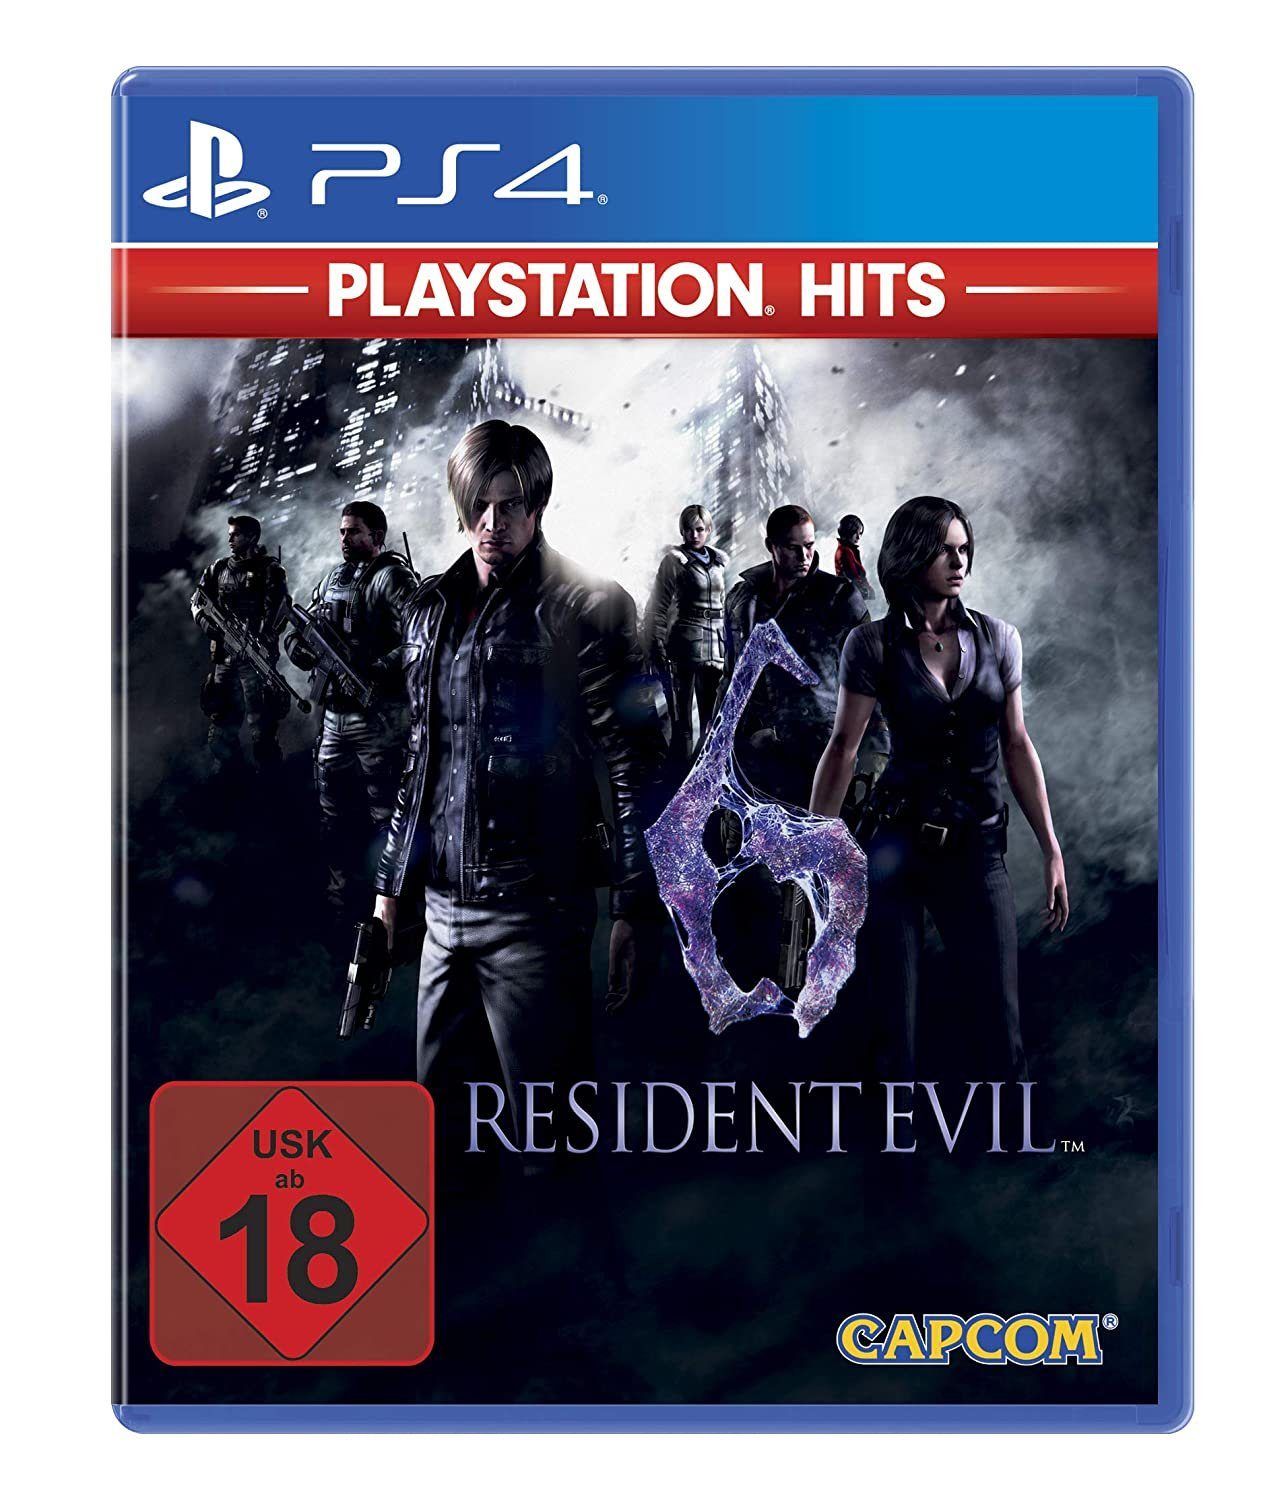 PS 6 PlayStation Resident Evil 4 Capcom Hits